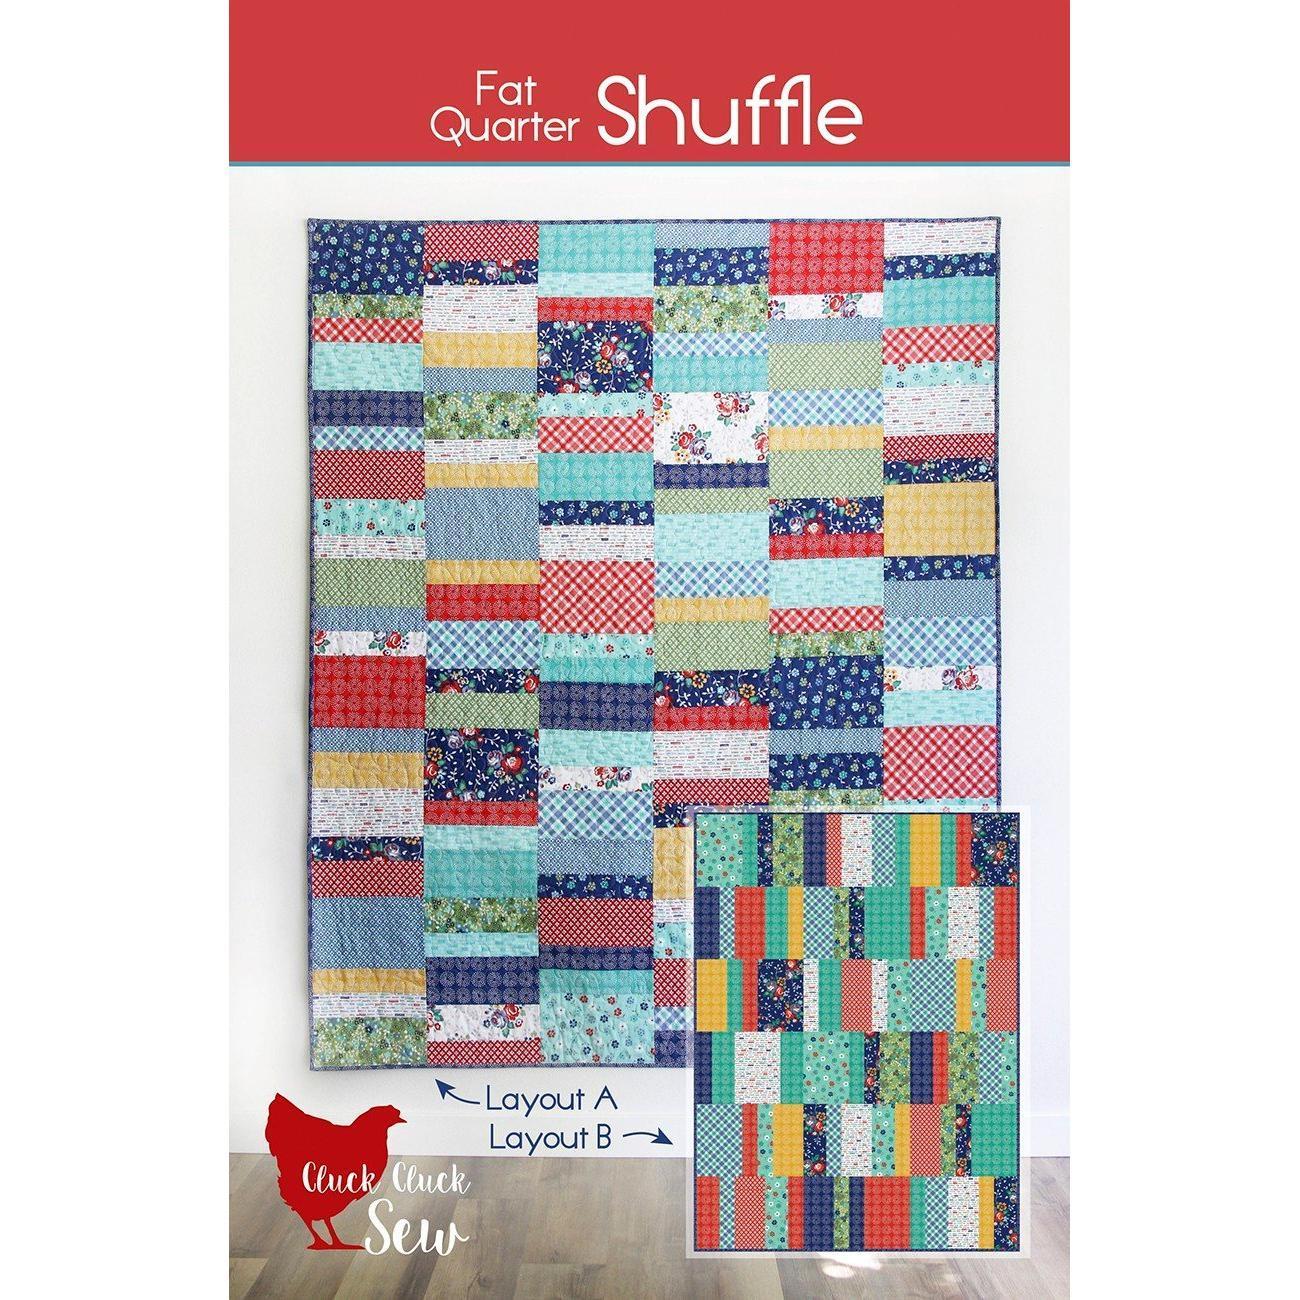 Fat Quarter Shuffle Quilt Pattern